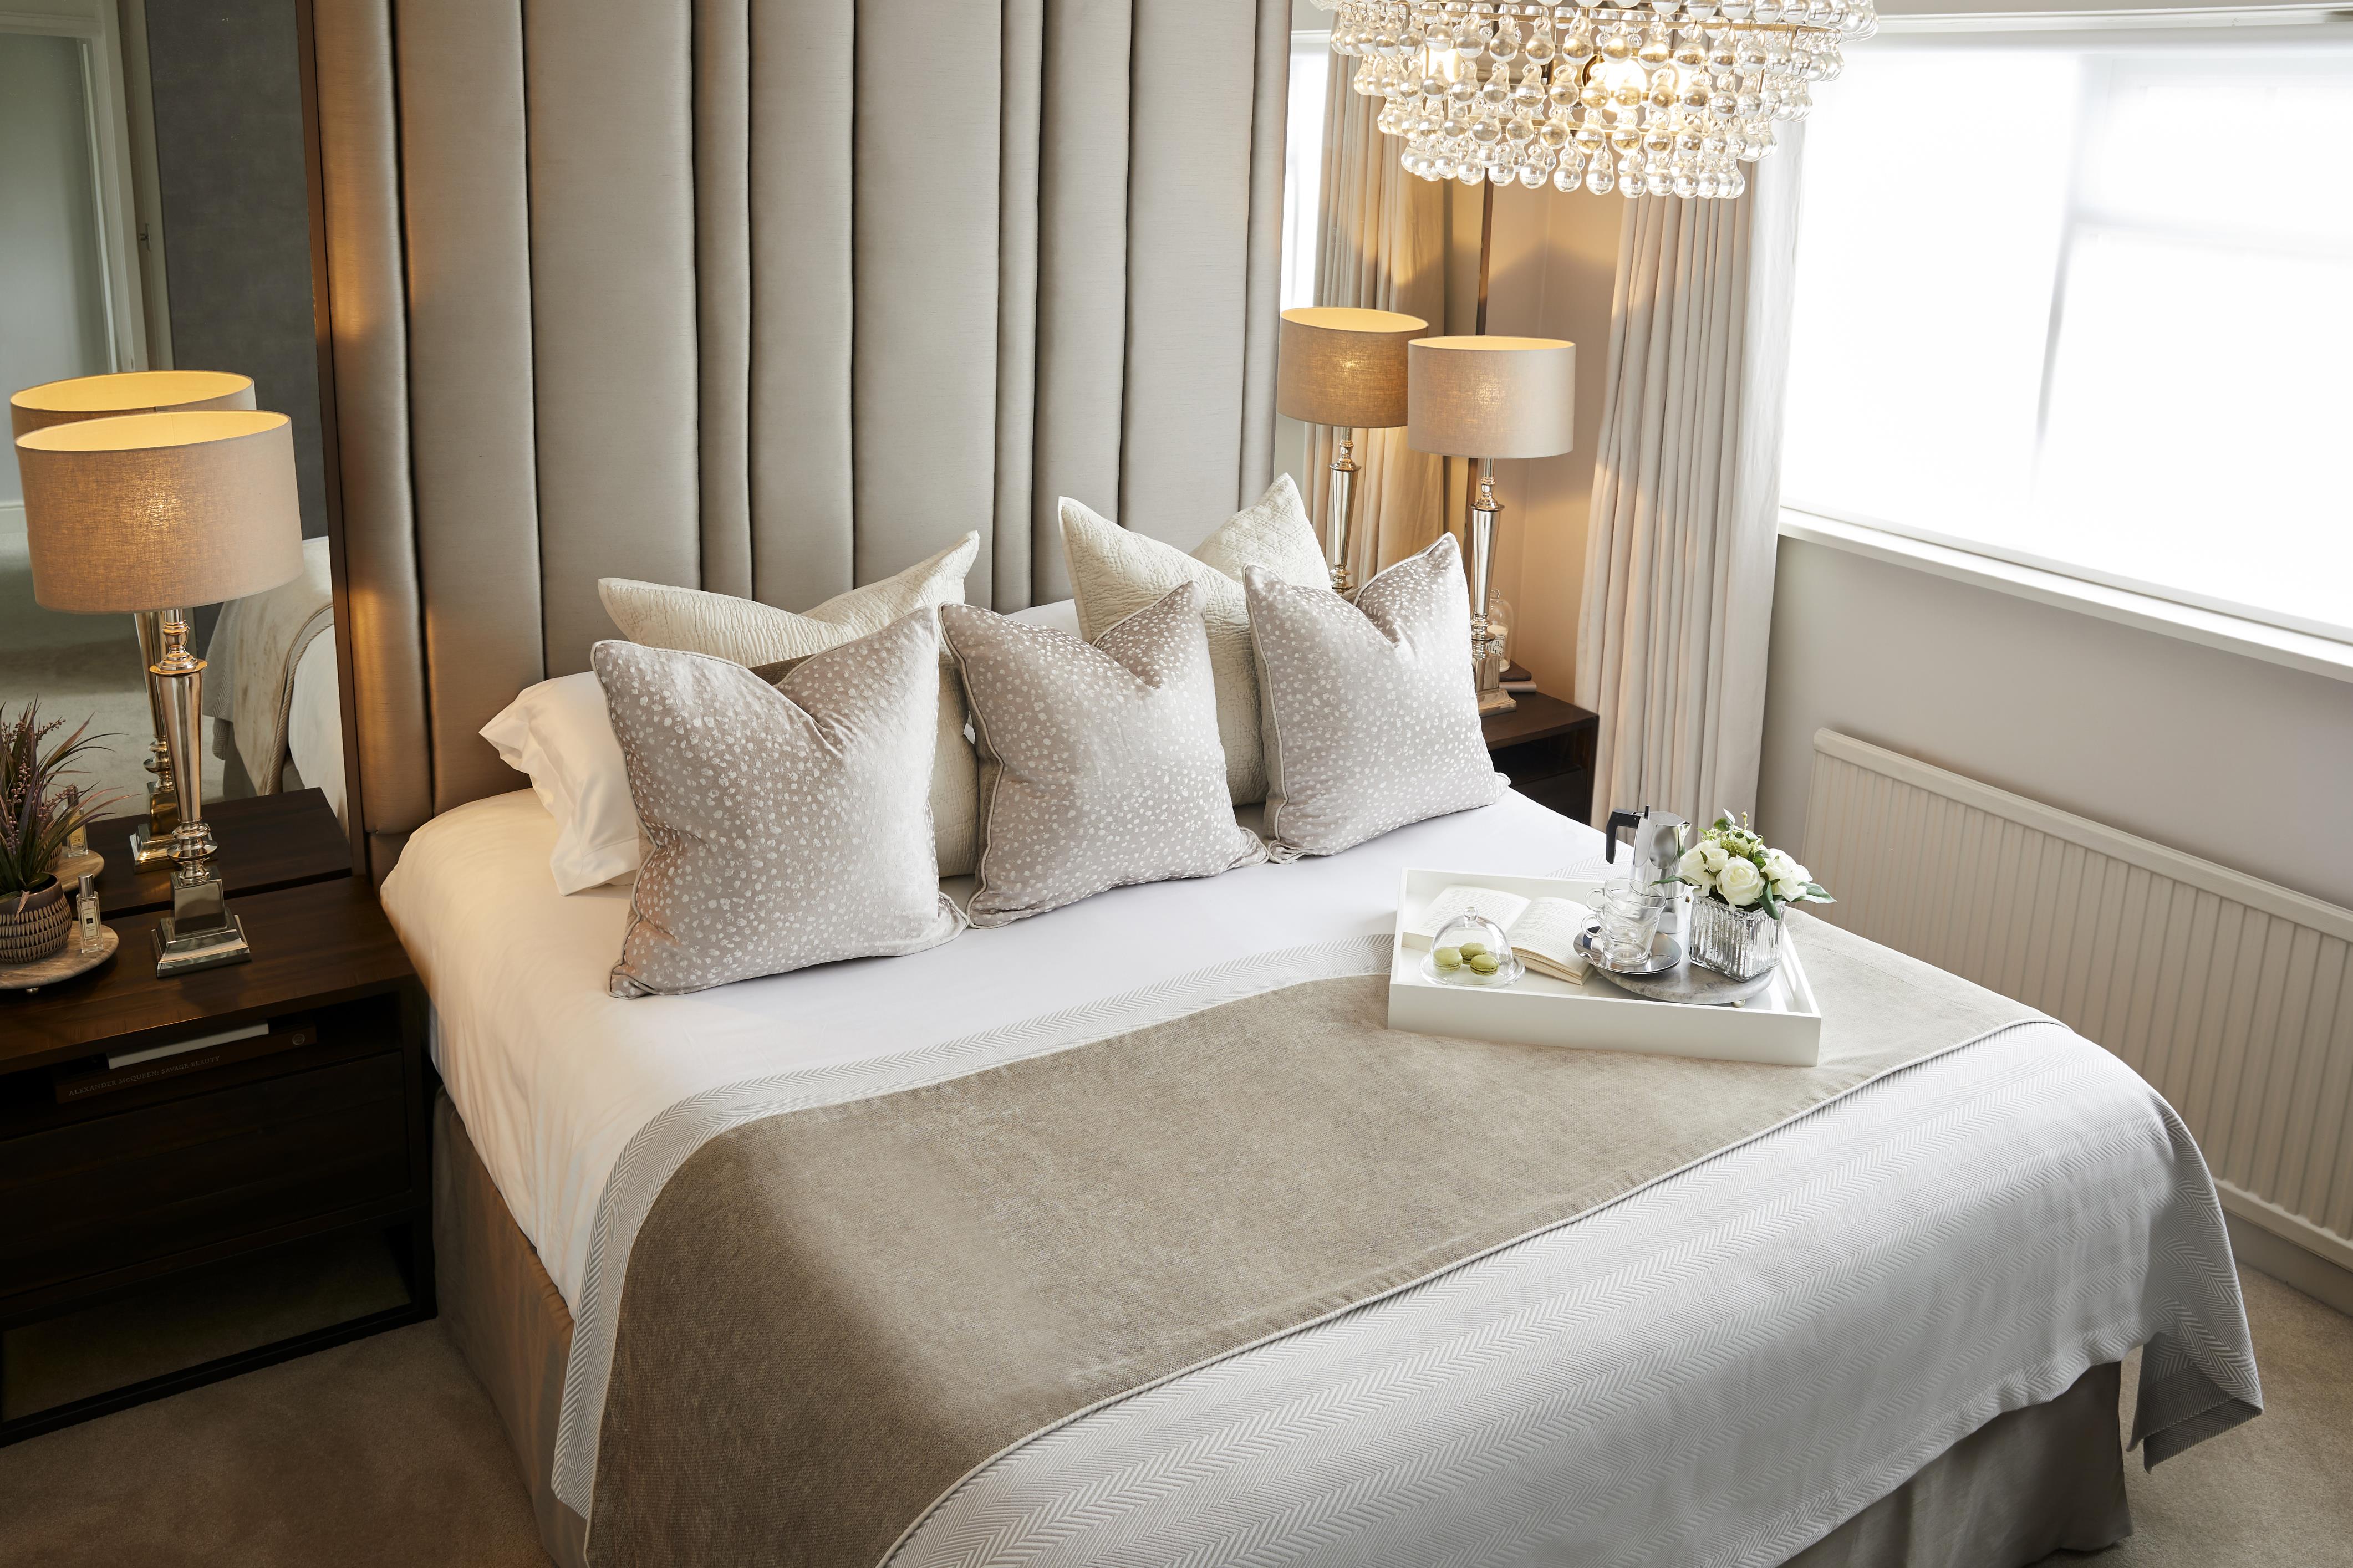 luxury hotel bedroom furniture